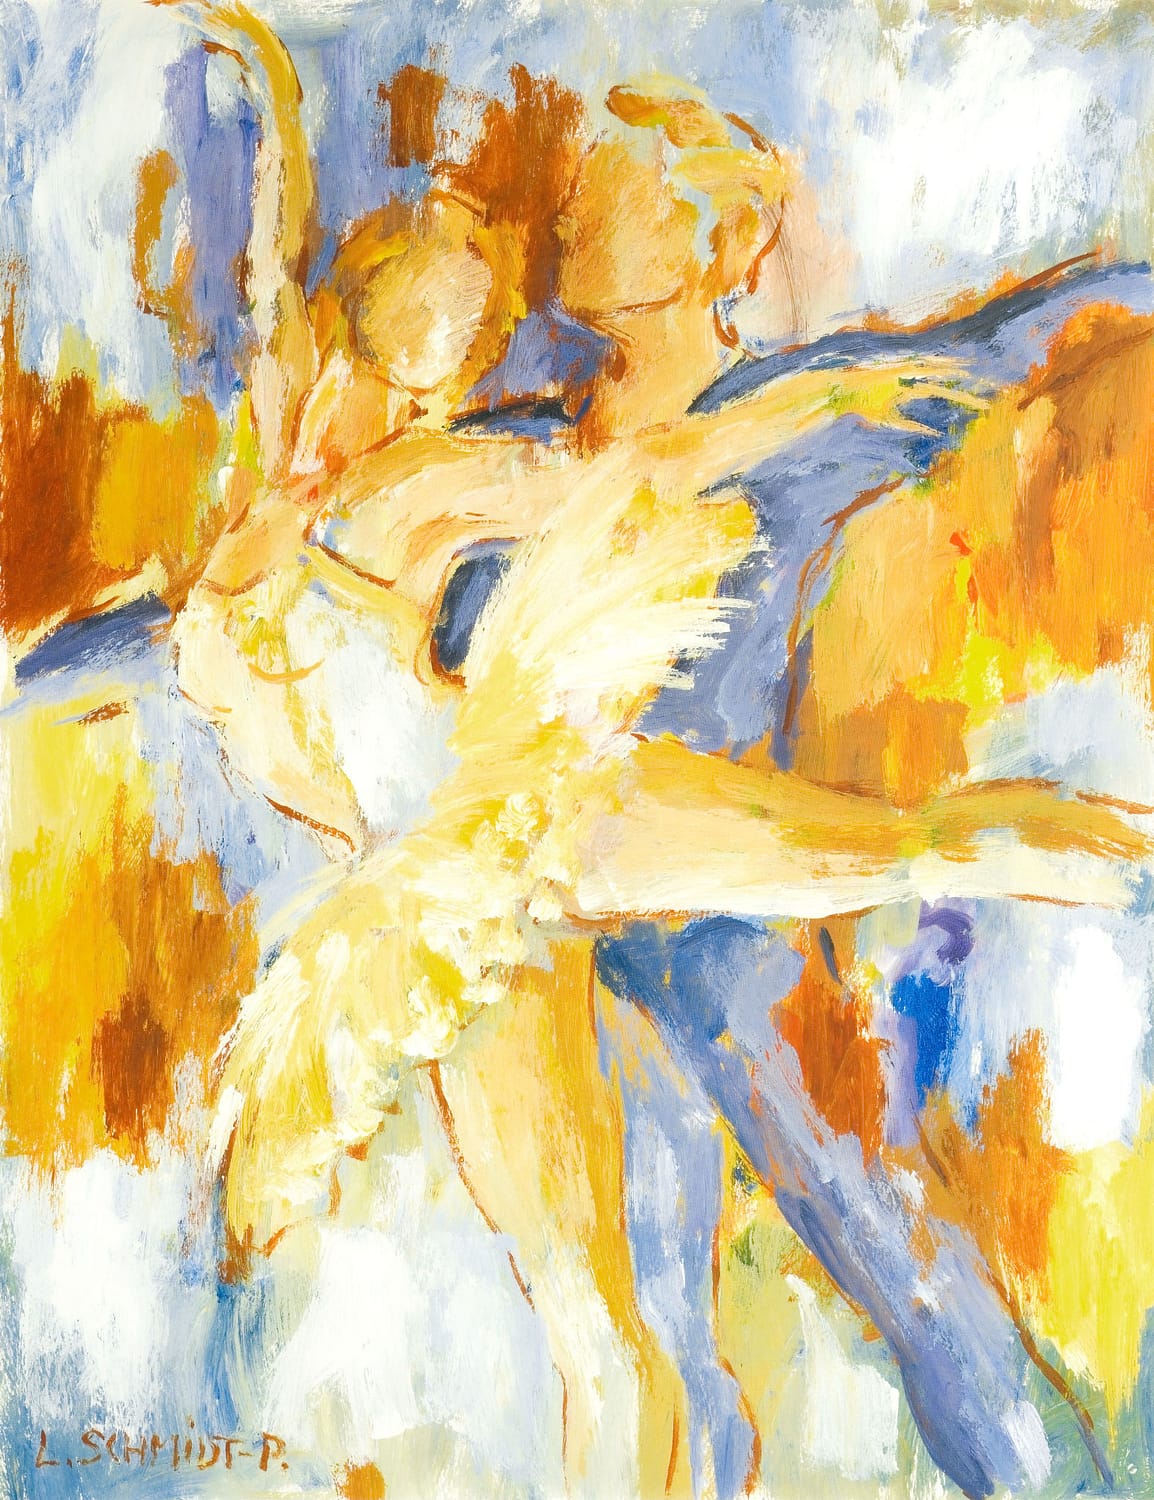 Lene Schmidt-Petersen: "Tones from the loving space" (45 x 58 cm)